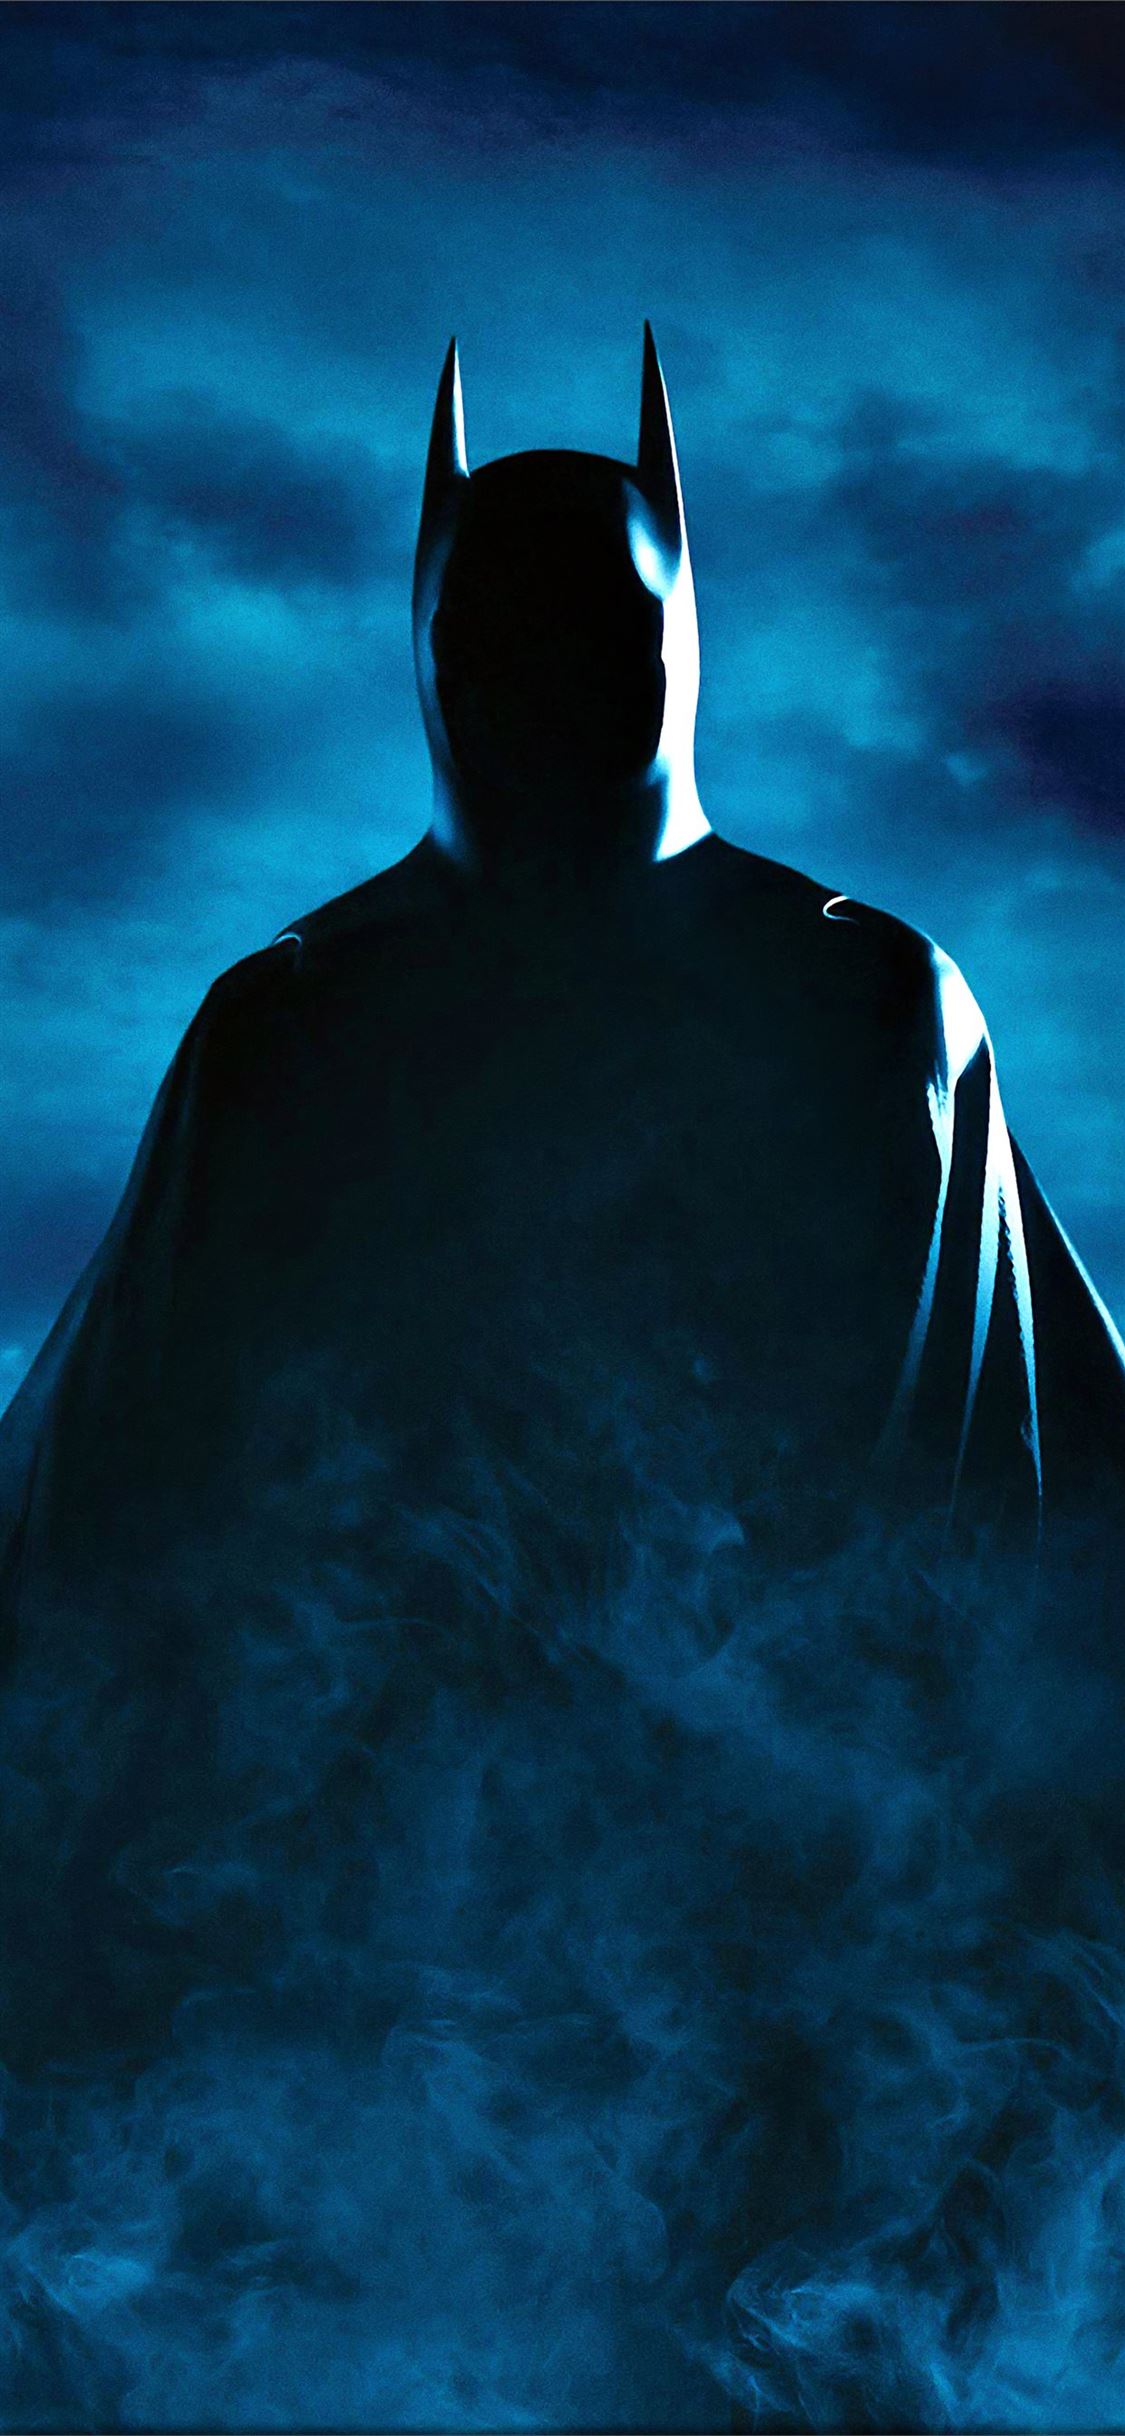 Batman Movie Poster iPhone X Wallpaper